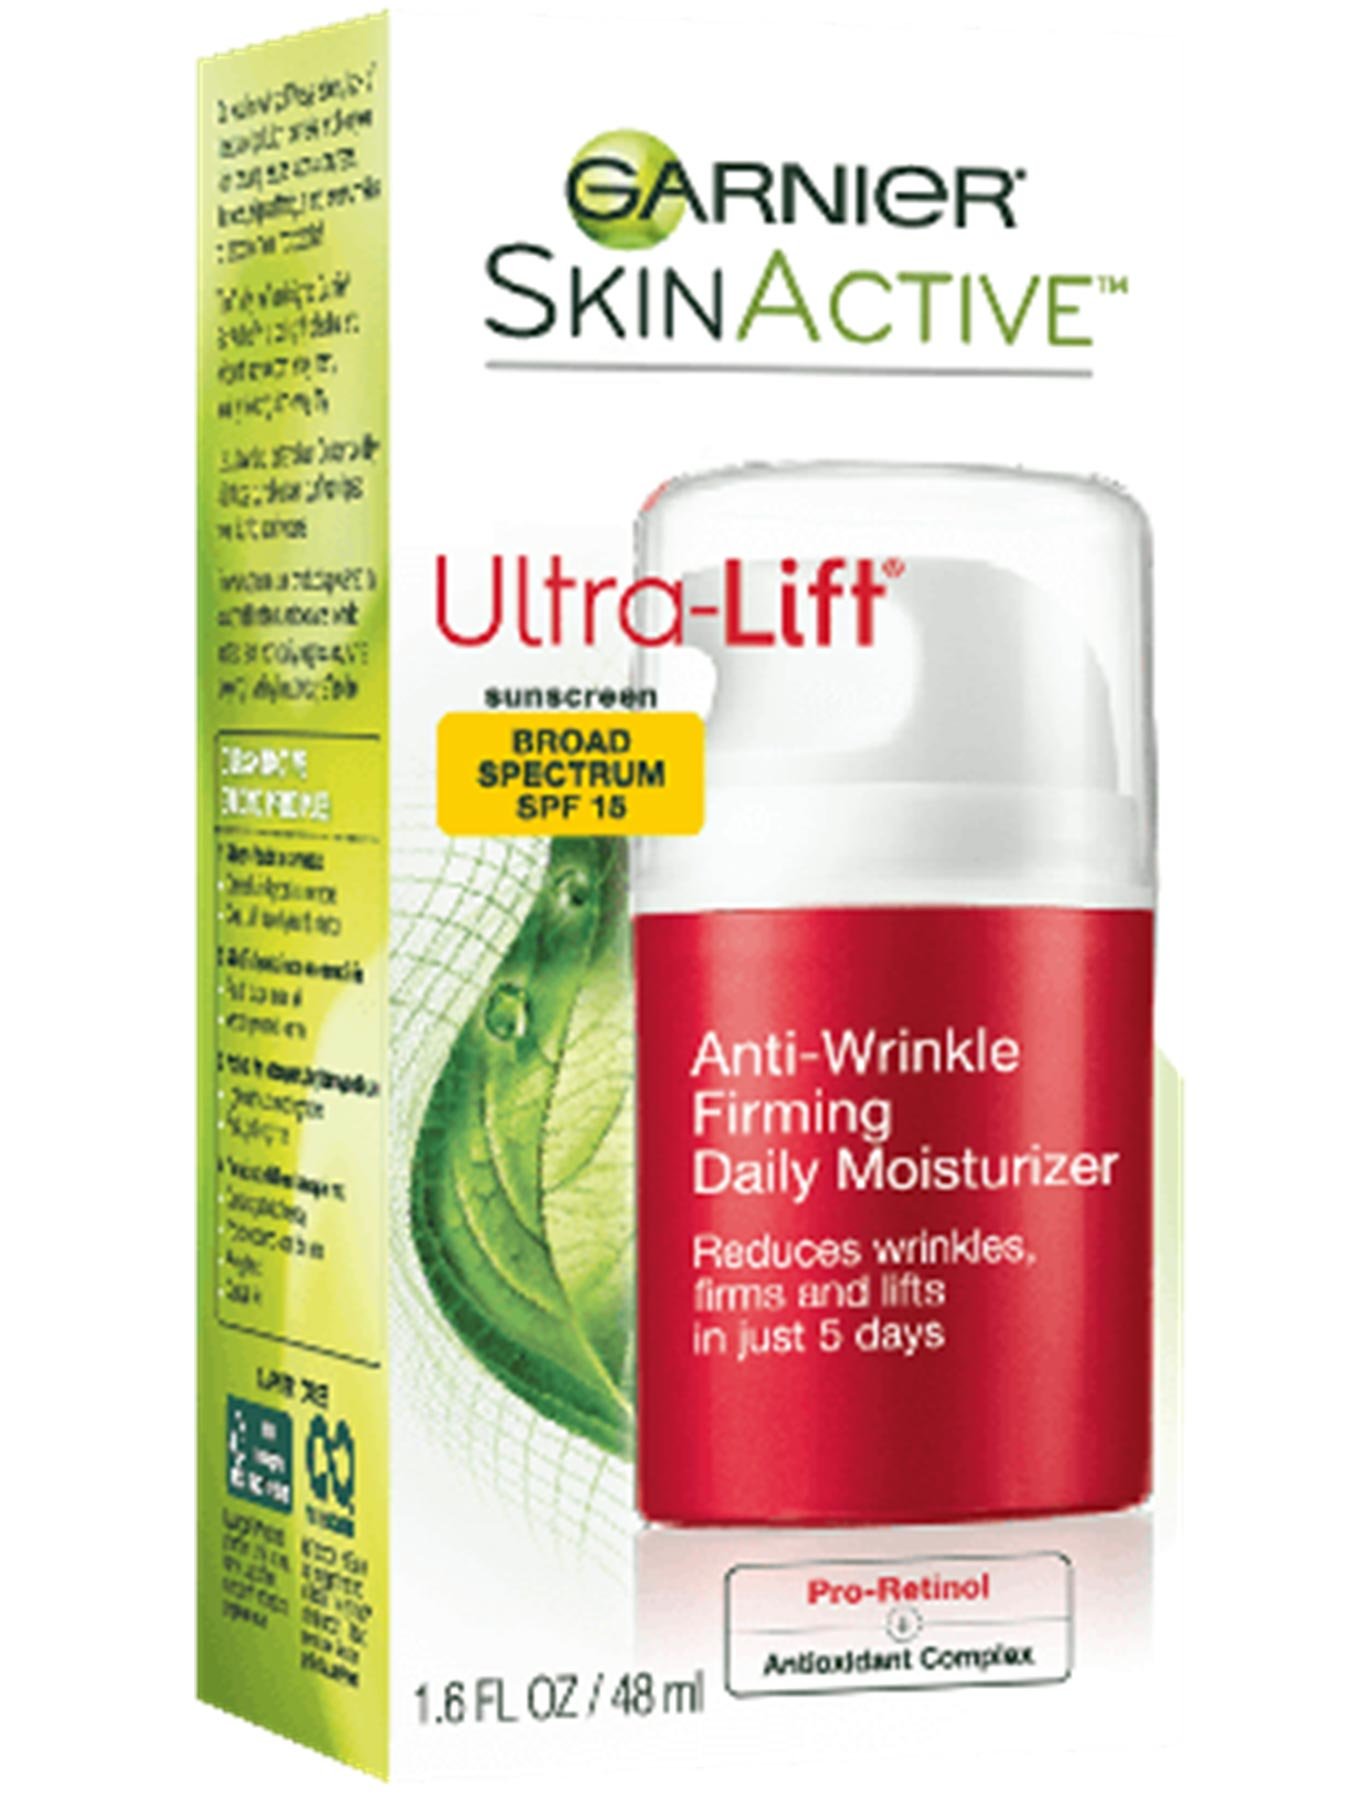 garnier skinactive ultra lift anti wrinkle firming moisturizer skin care 2